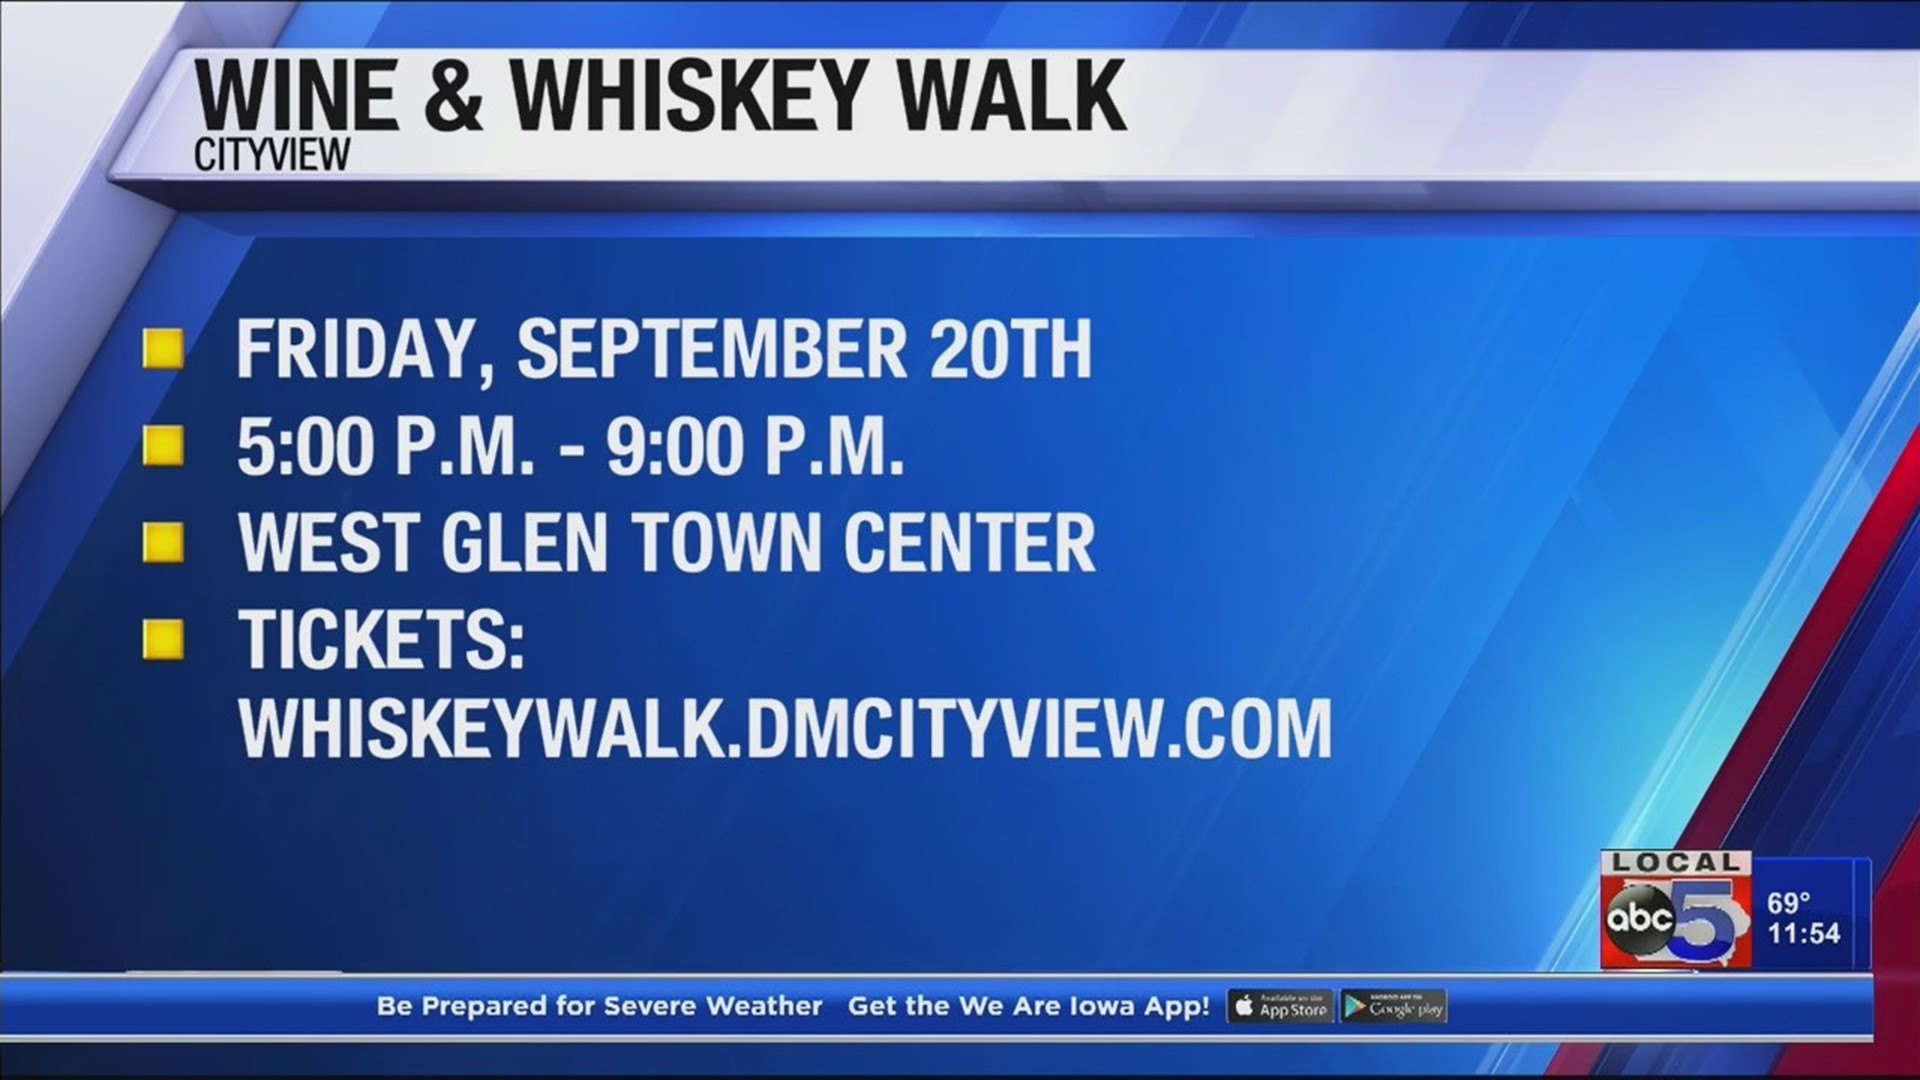 Cityview is hosting Wine & Whiskey Walk on September 20th.